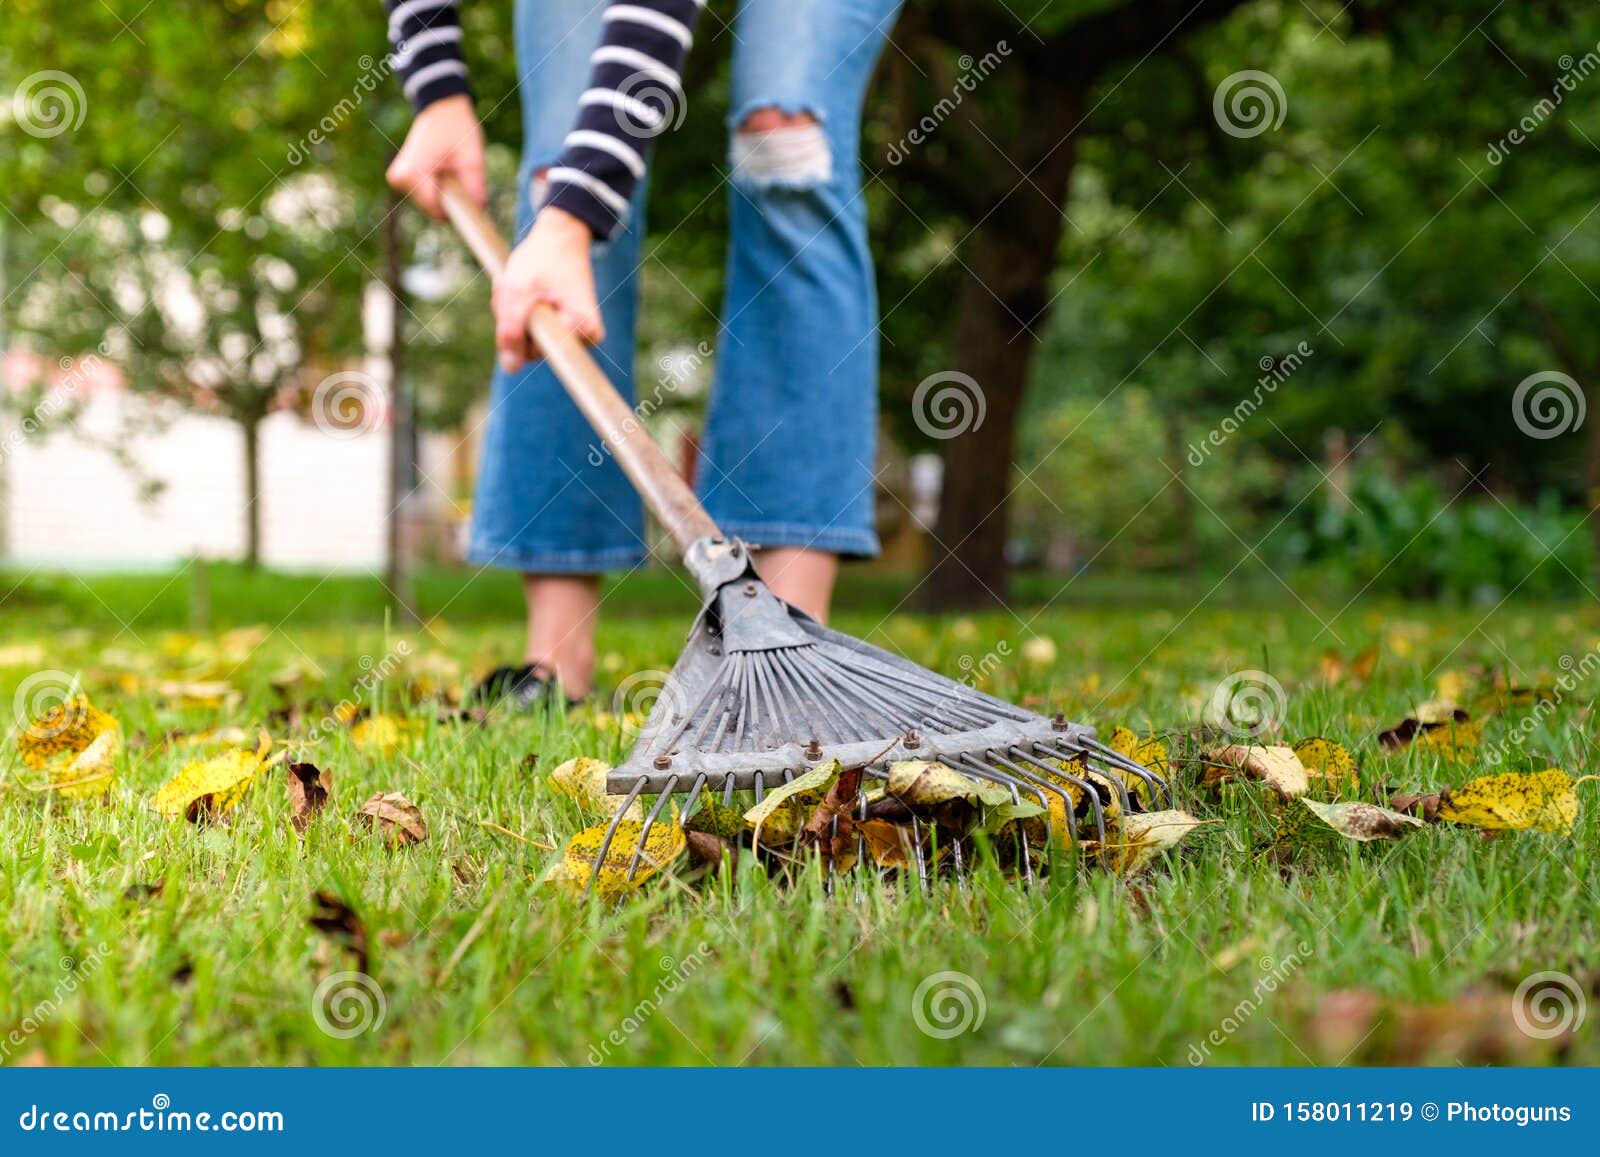 raking fallen leaves in garden. gardener woman cleaning lawn from leaves in backyard. woman standing with rake. autumnal seasonal